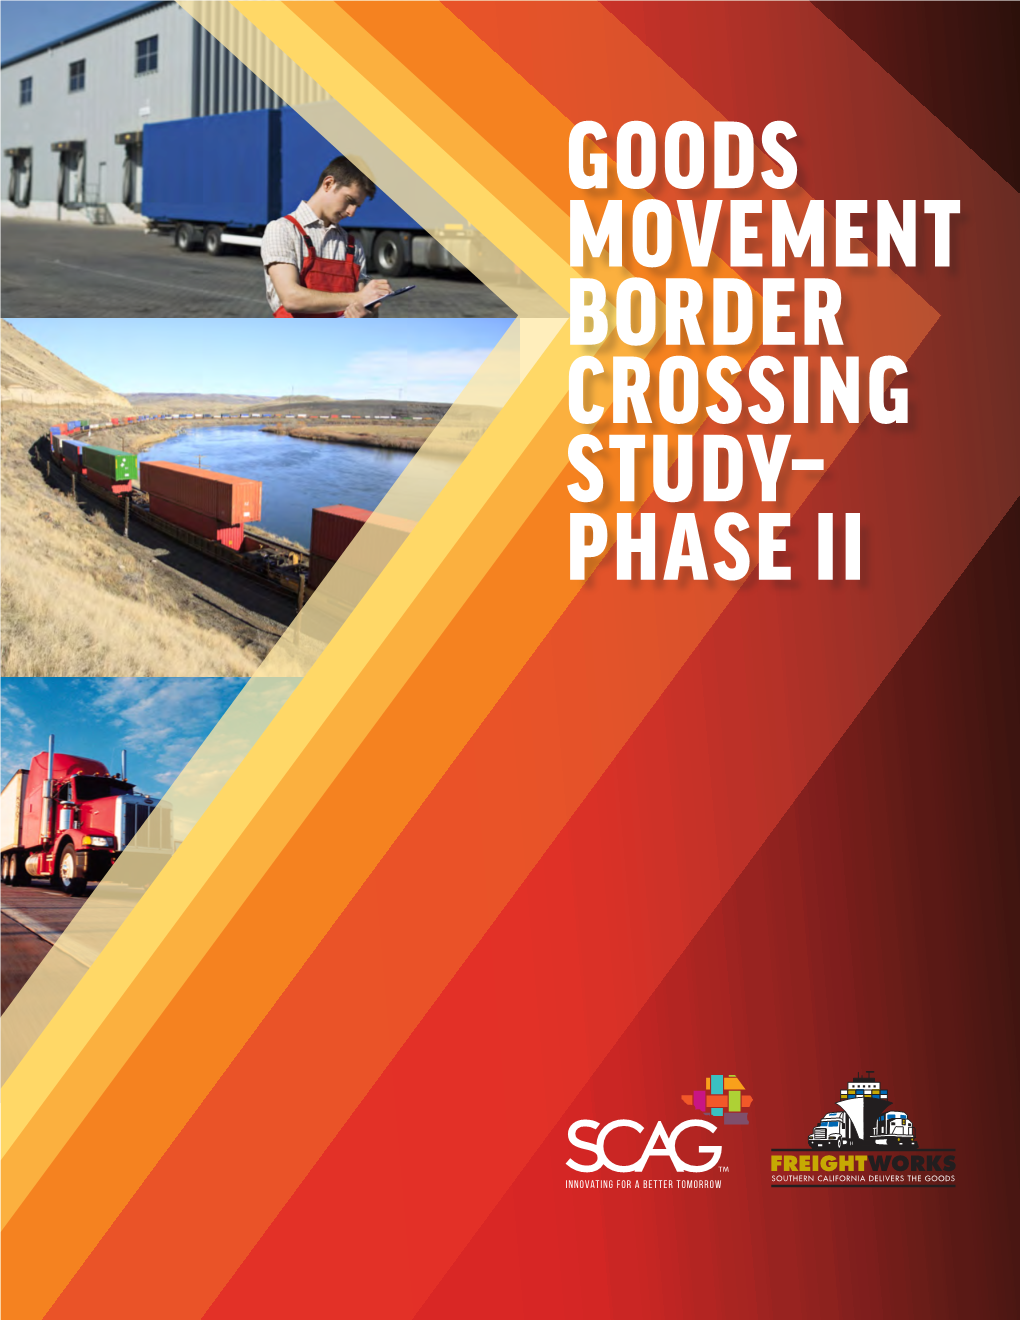 Scag Goods Movement Border Crossing Study